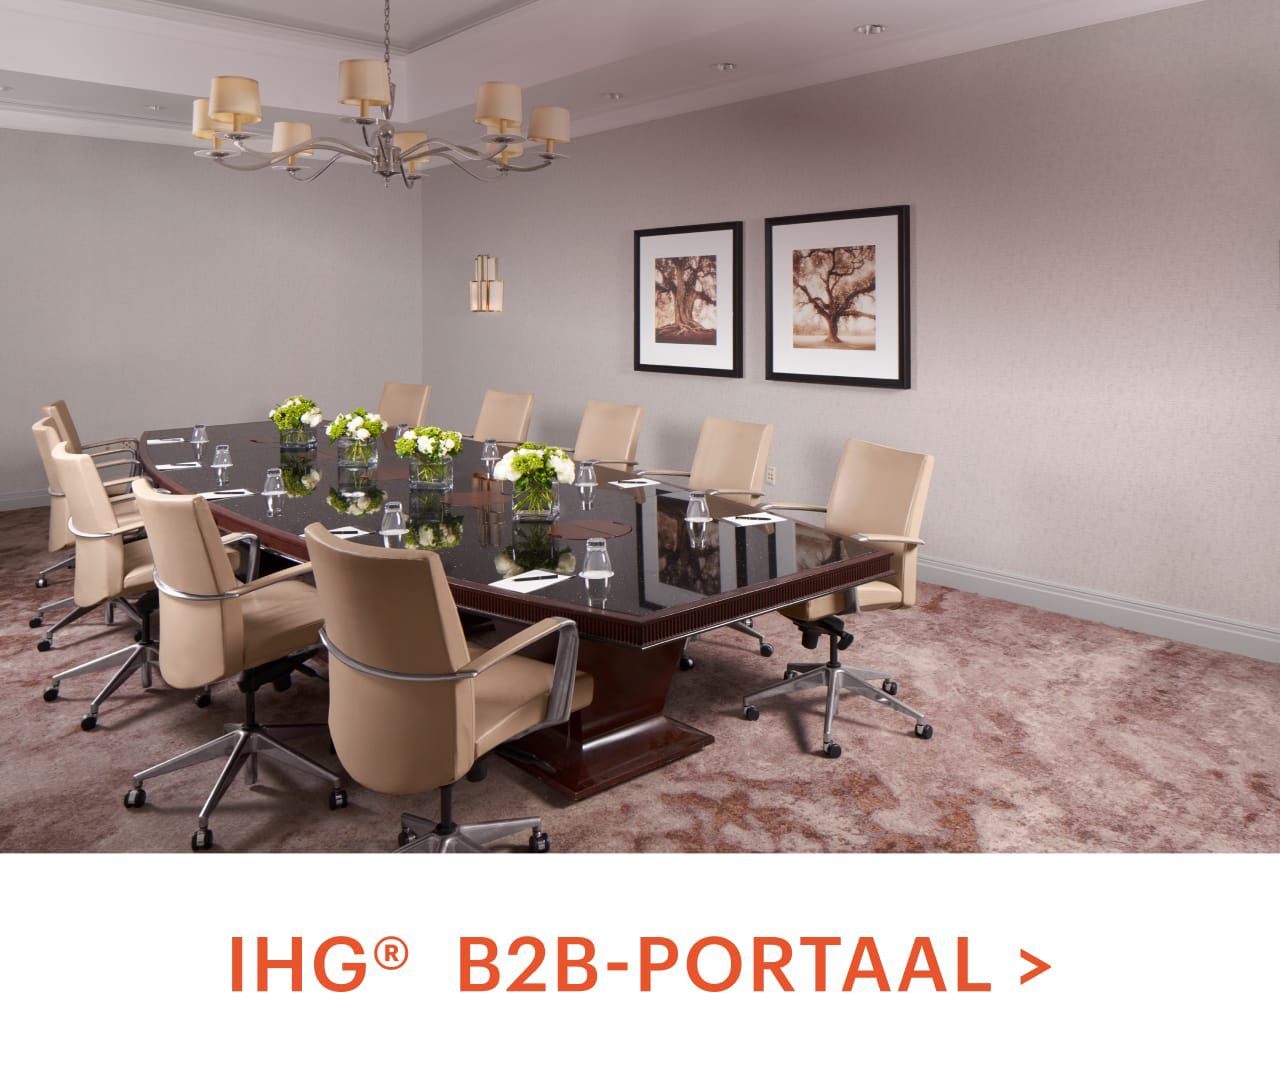 IHG B2B-portal